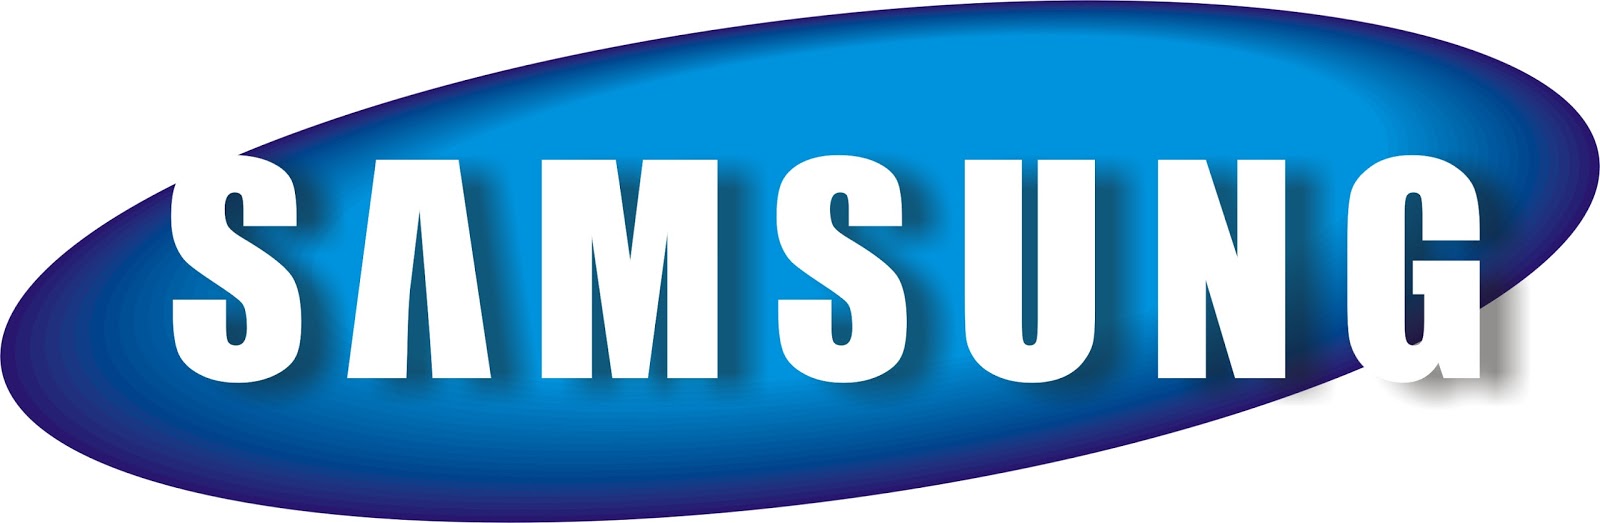 Jpg 1600X523 Samsung Logo Transparent Background - Samsung, Transparent background PNG HD thumbnail